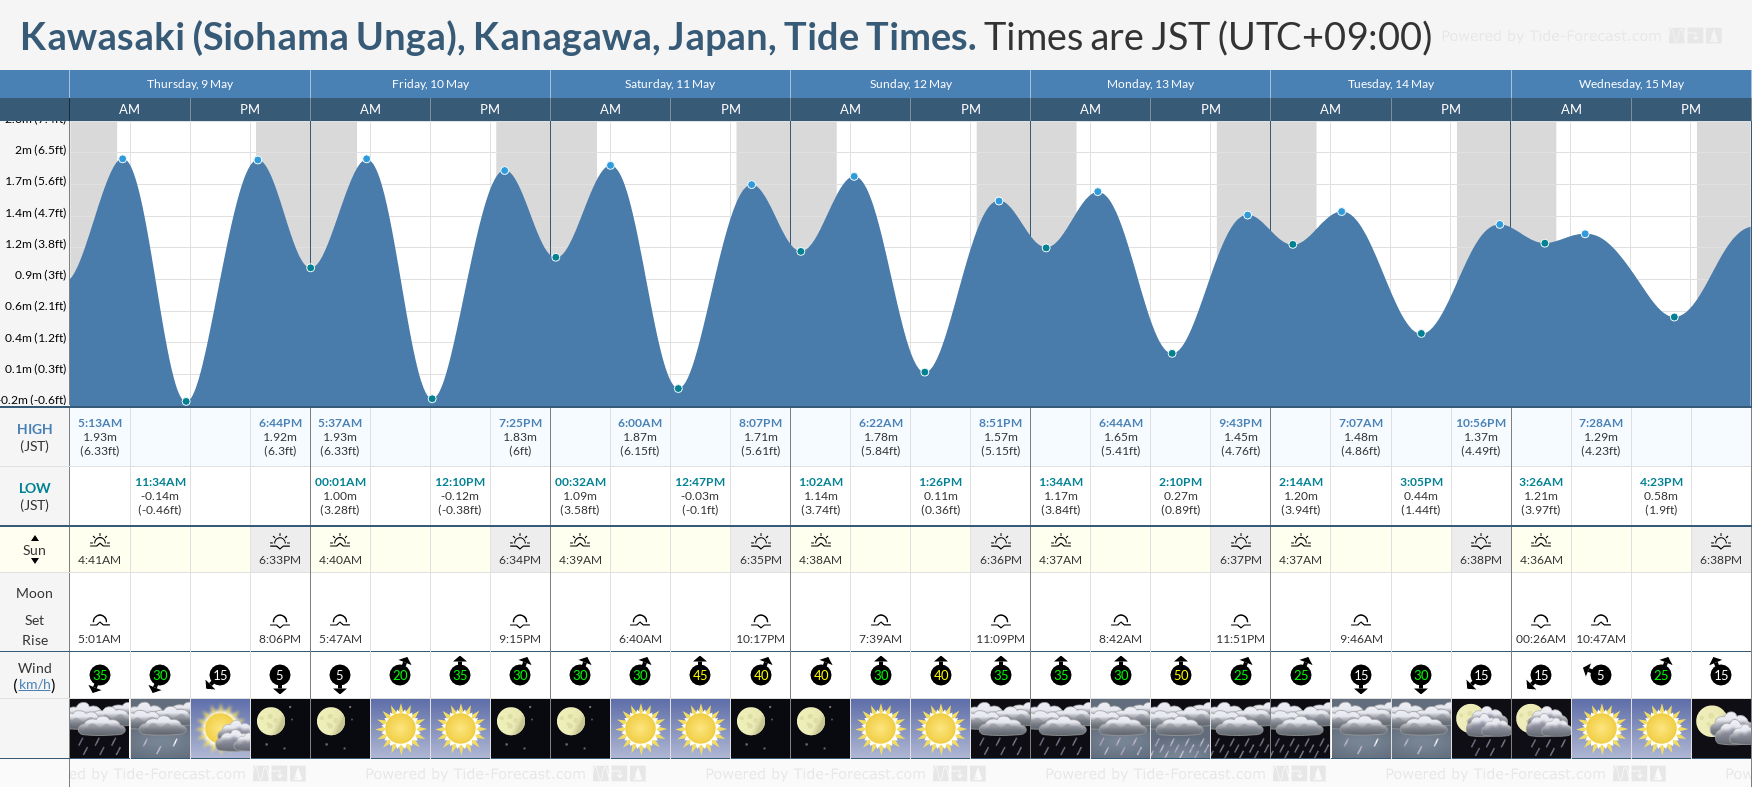 Kawasaki (Siohama Unga), Kanagawa, Japan Tide Chart including high and low tide times for the next 7 days